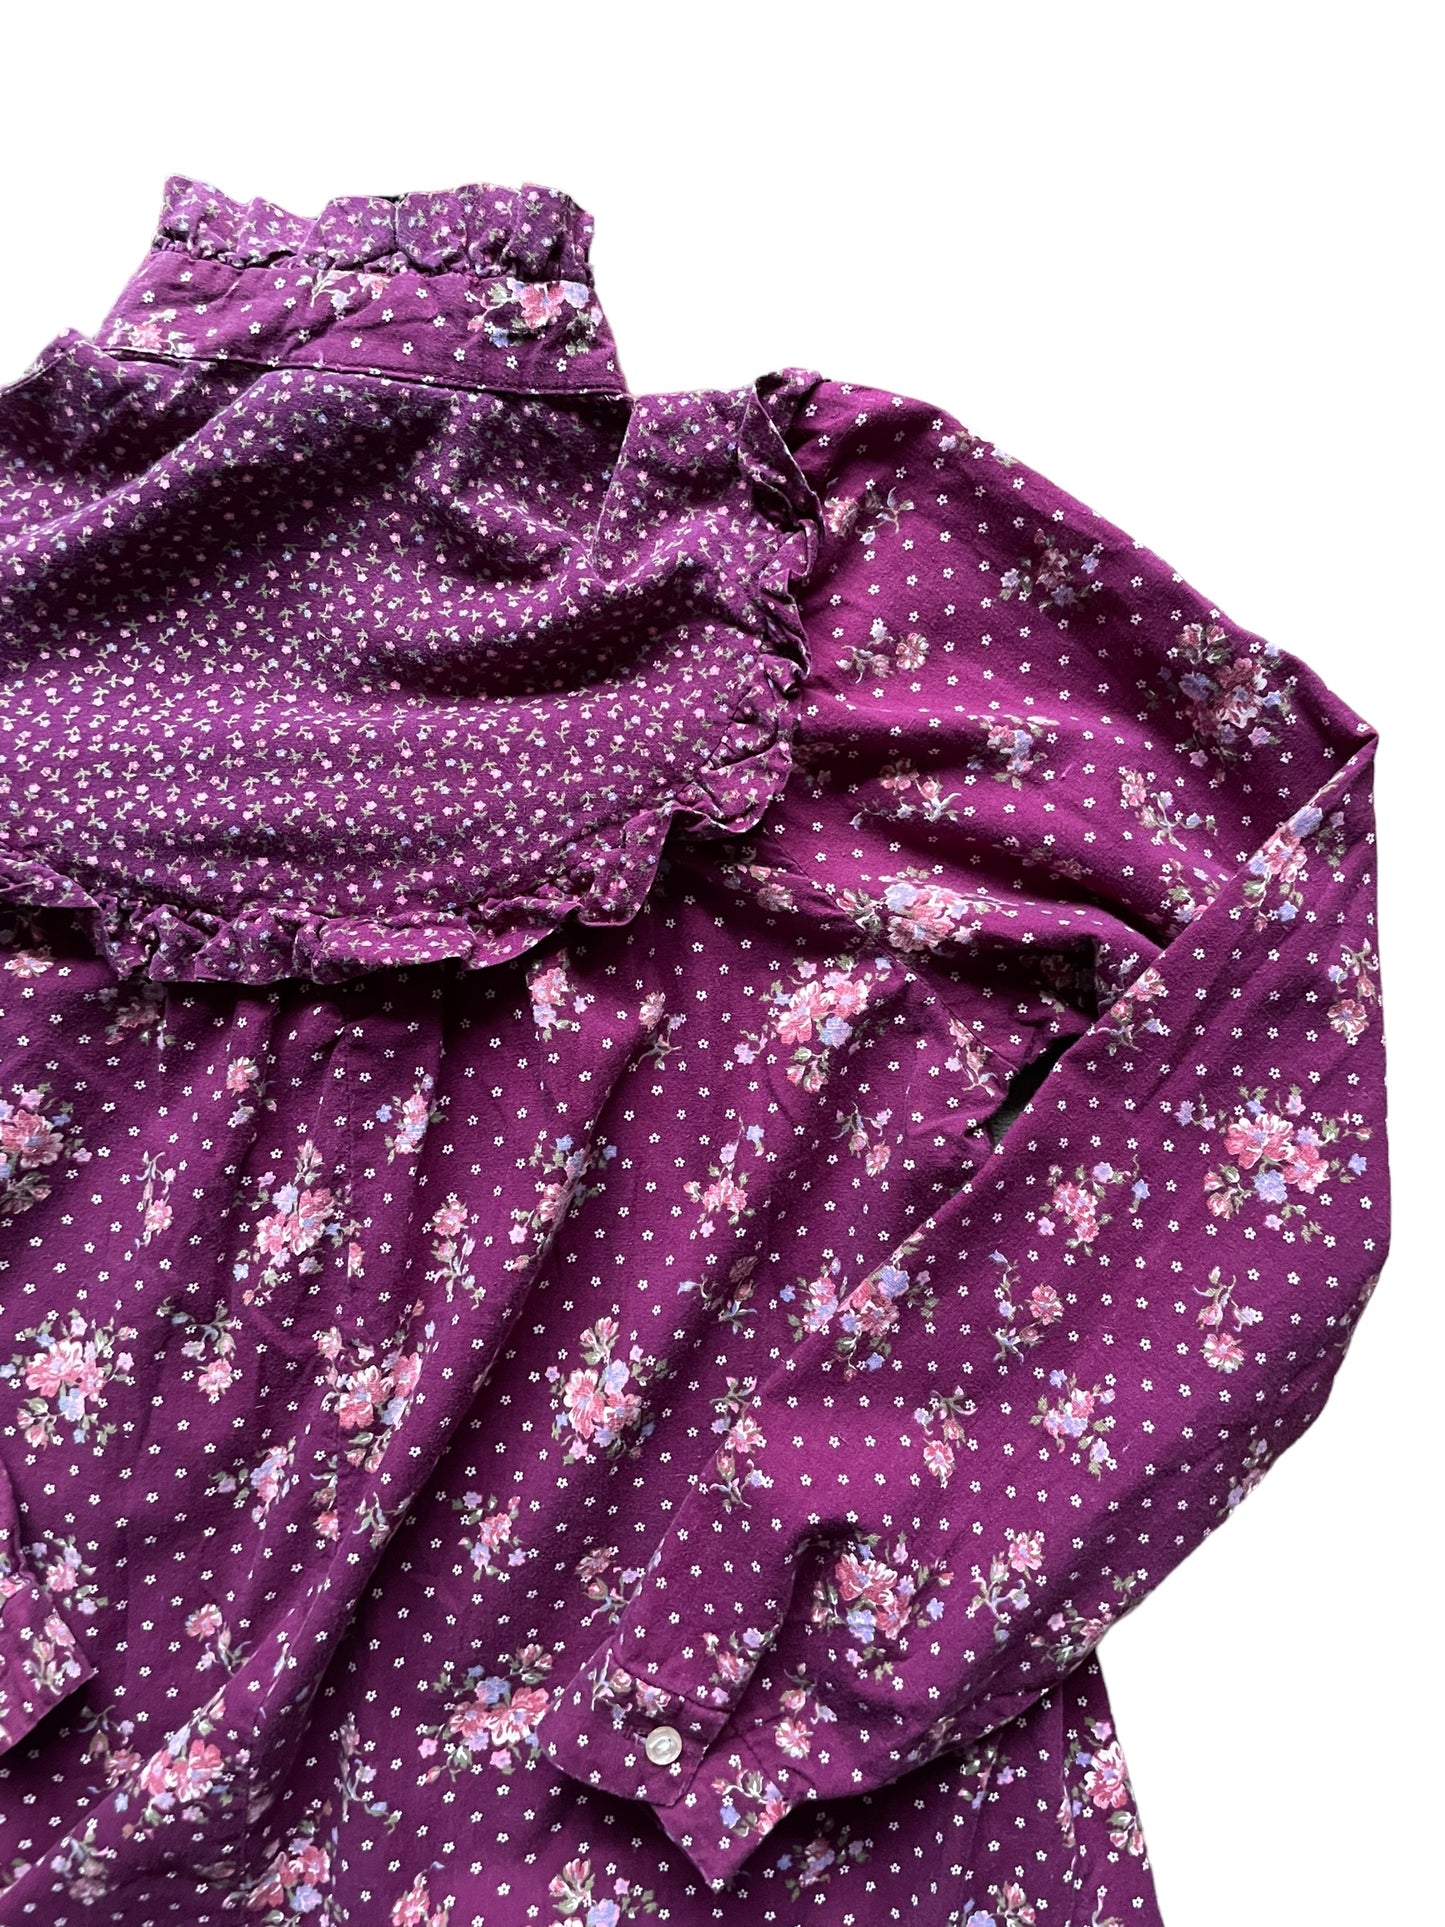 Back right shoulder of Vintage 1970s Eber Purple Floral Prairie Top | Barn Owl Vintage Seattle | Seattle Ladies Vintage